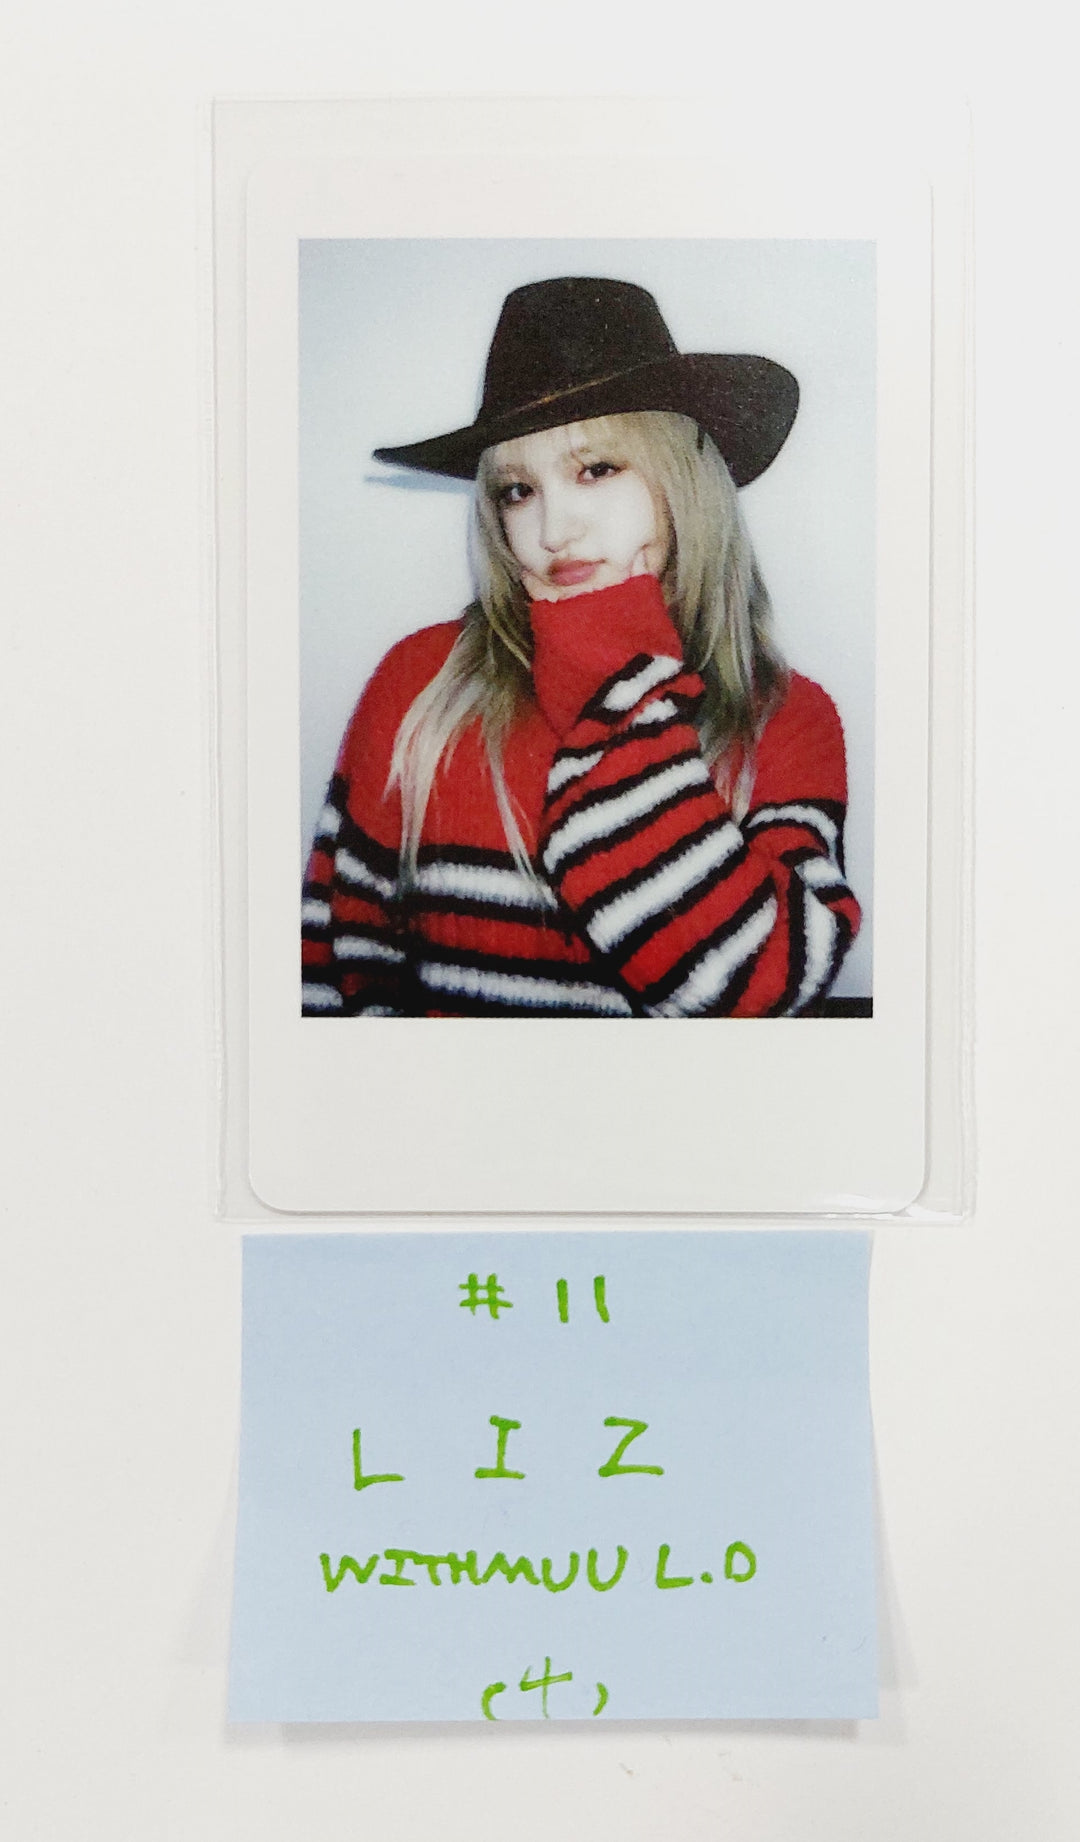 IVE - 1st EP "I'VE MINE" [Withmuu, Soundwave] Lucky Draw Event Photocard & Polaroid Type Photocard [23.10.14]